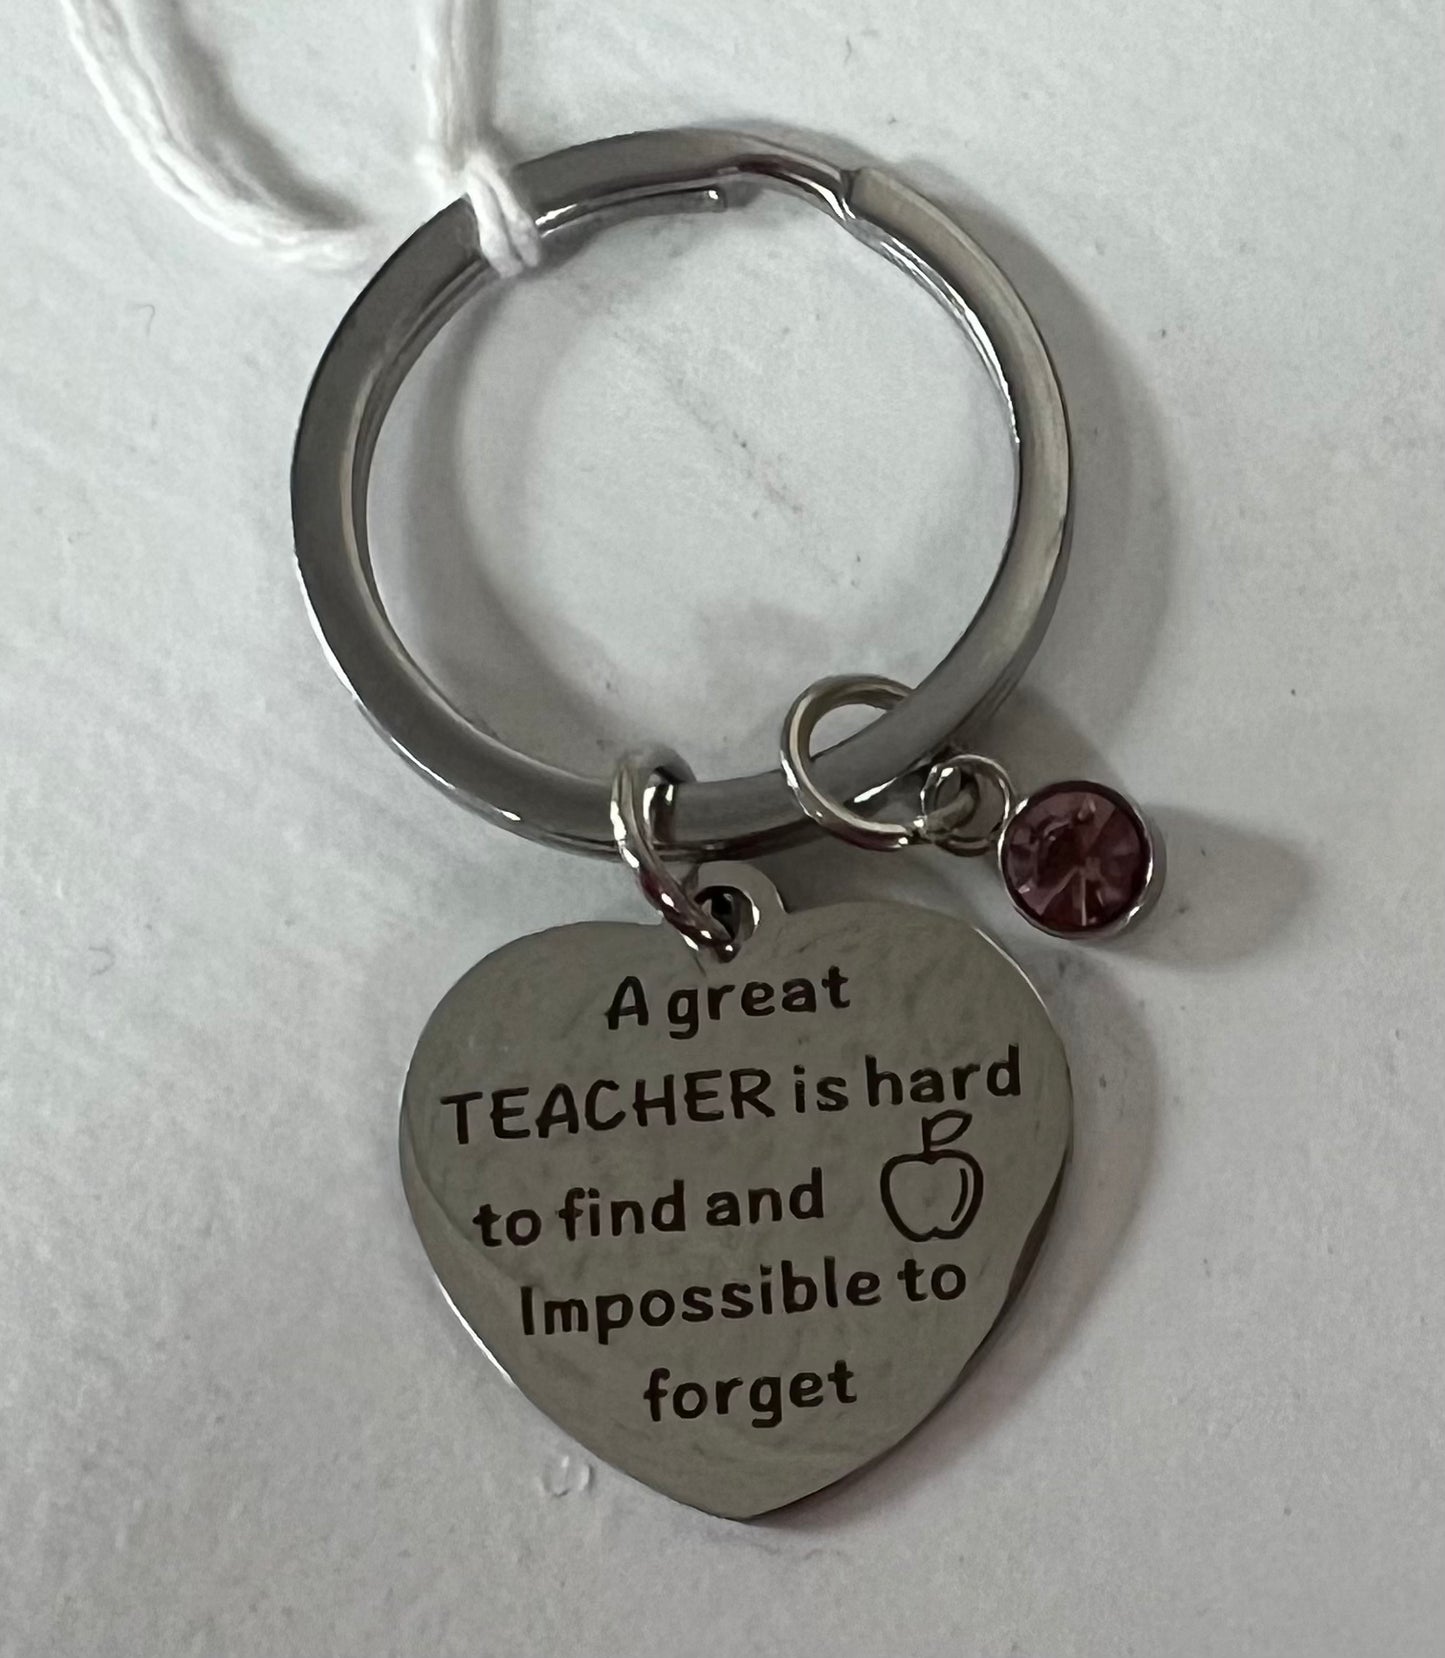 Teacher keychain